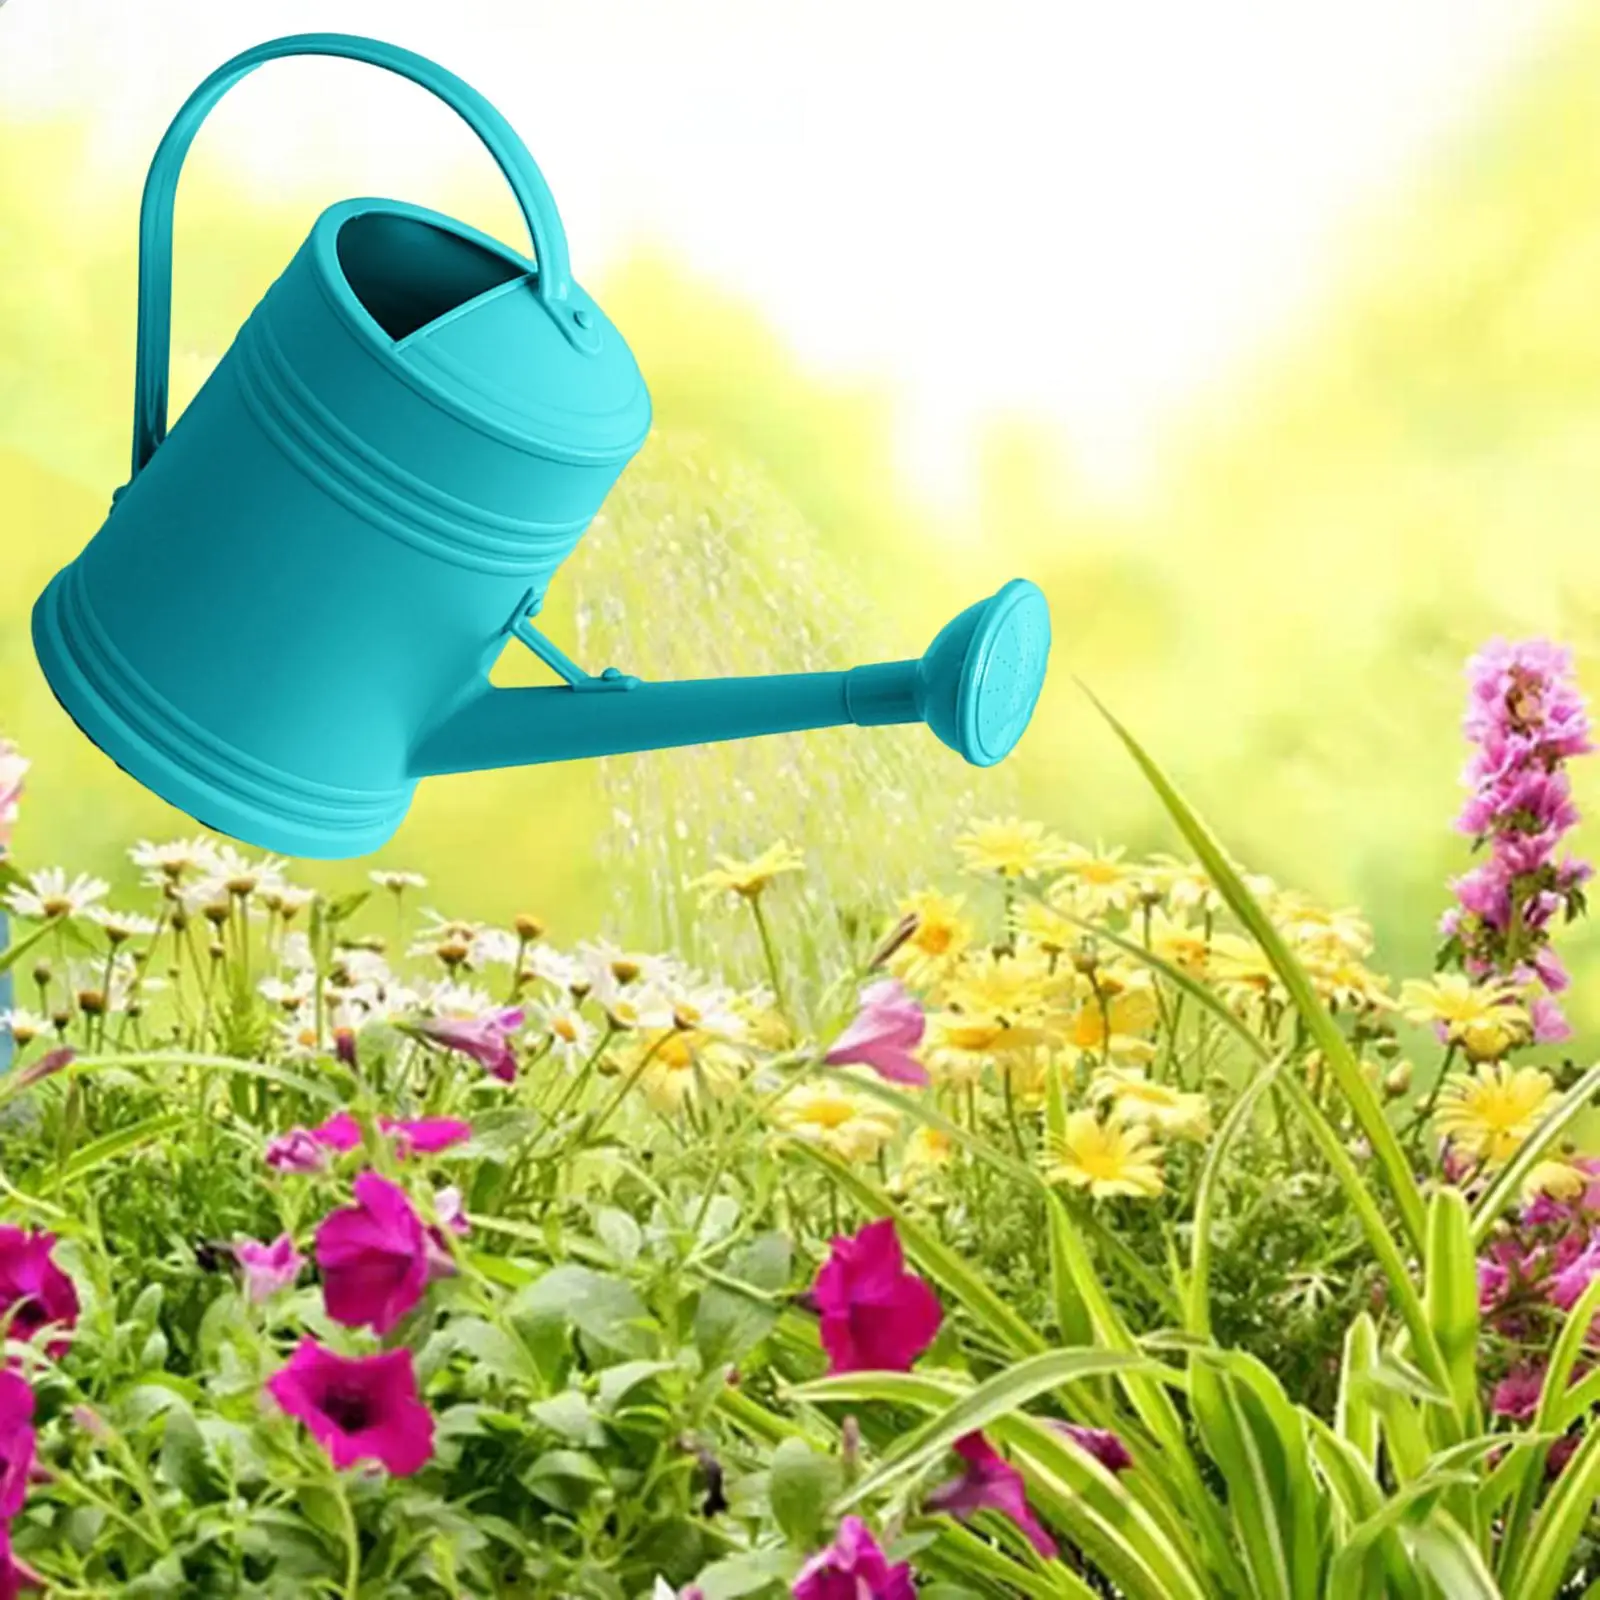 Watering Can 0.5 Gallon Long Mouth Creative Flower Watering Can for Garden Flower Gardening Indoor Outdoor Houseplants Bonsai